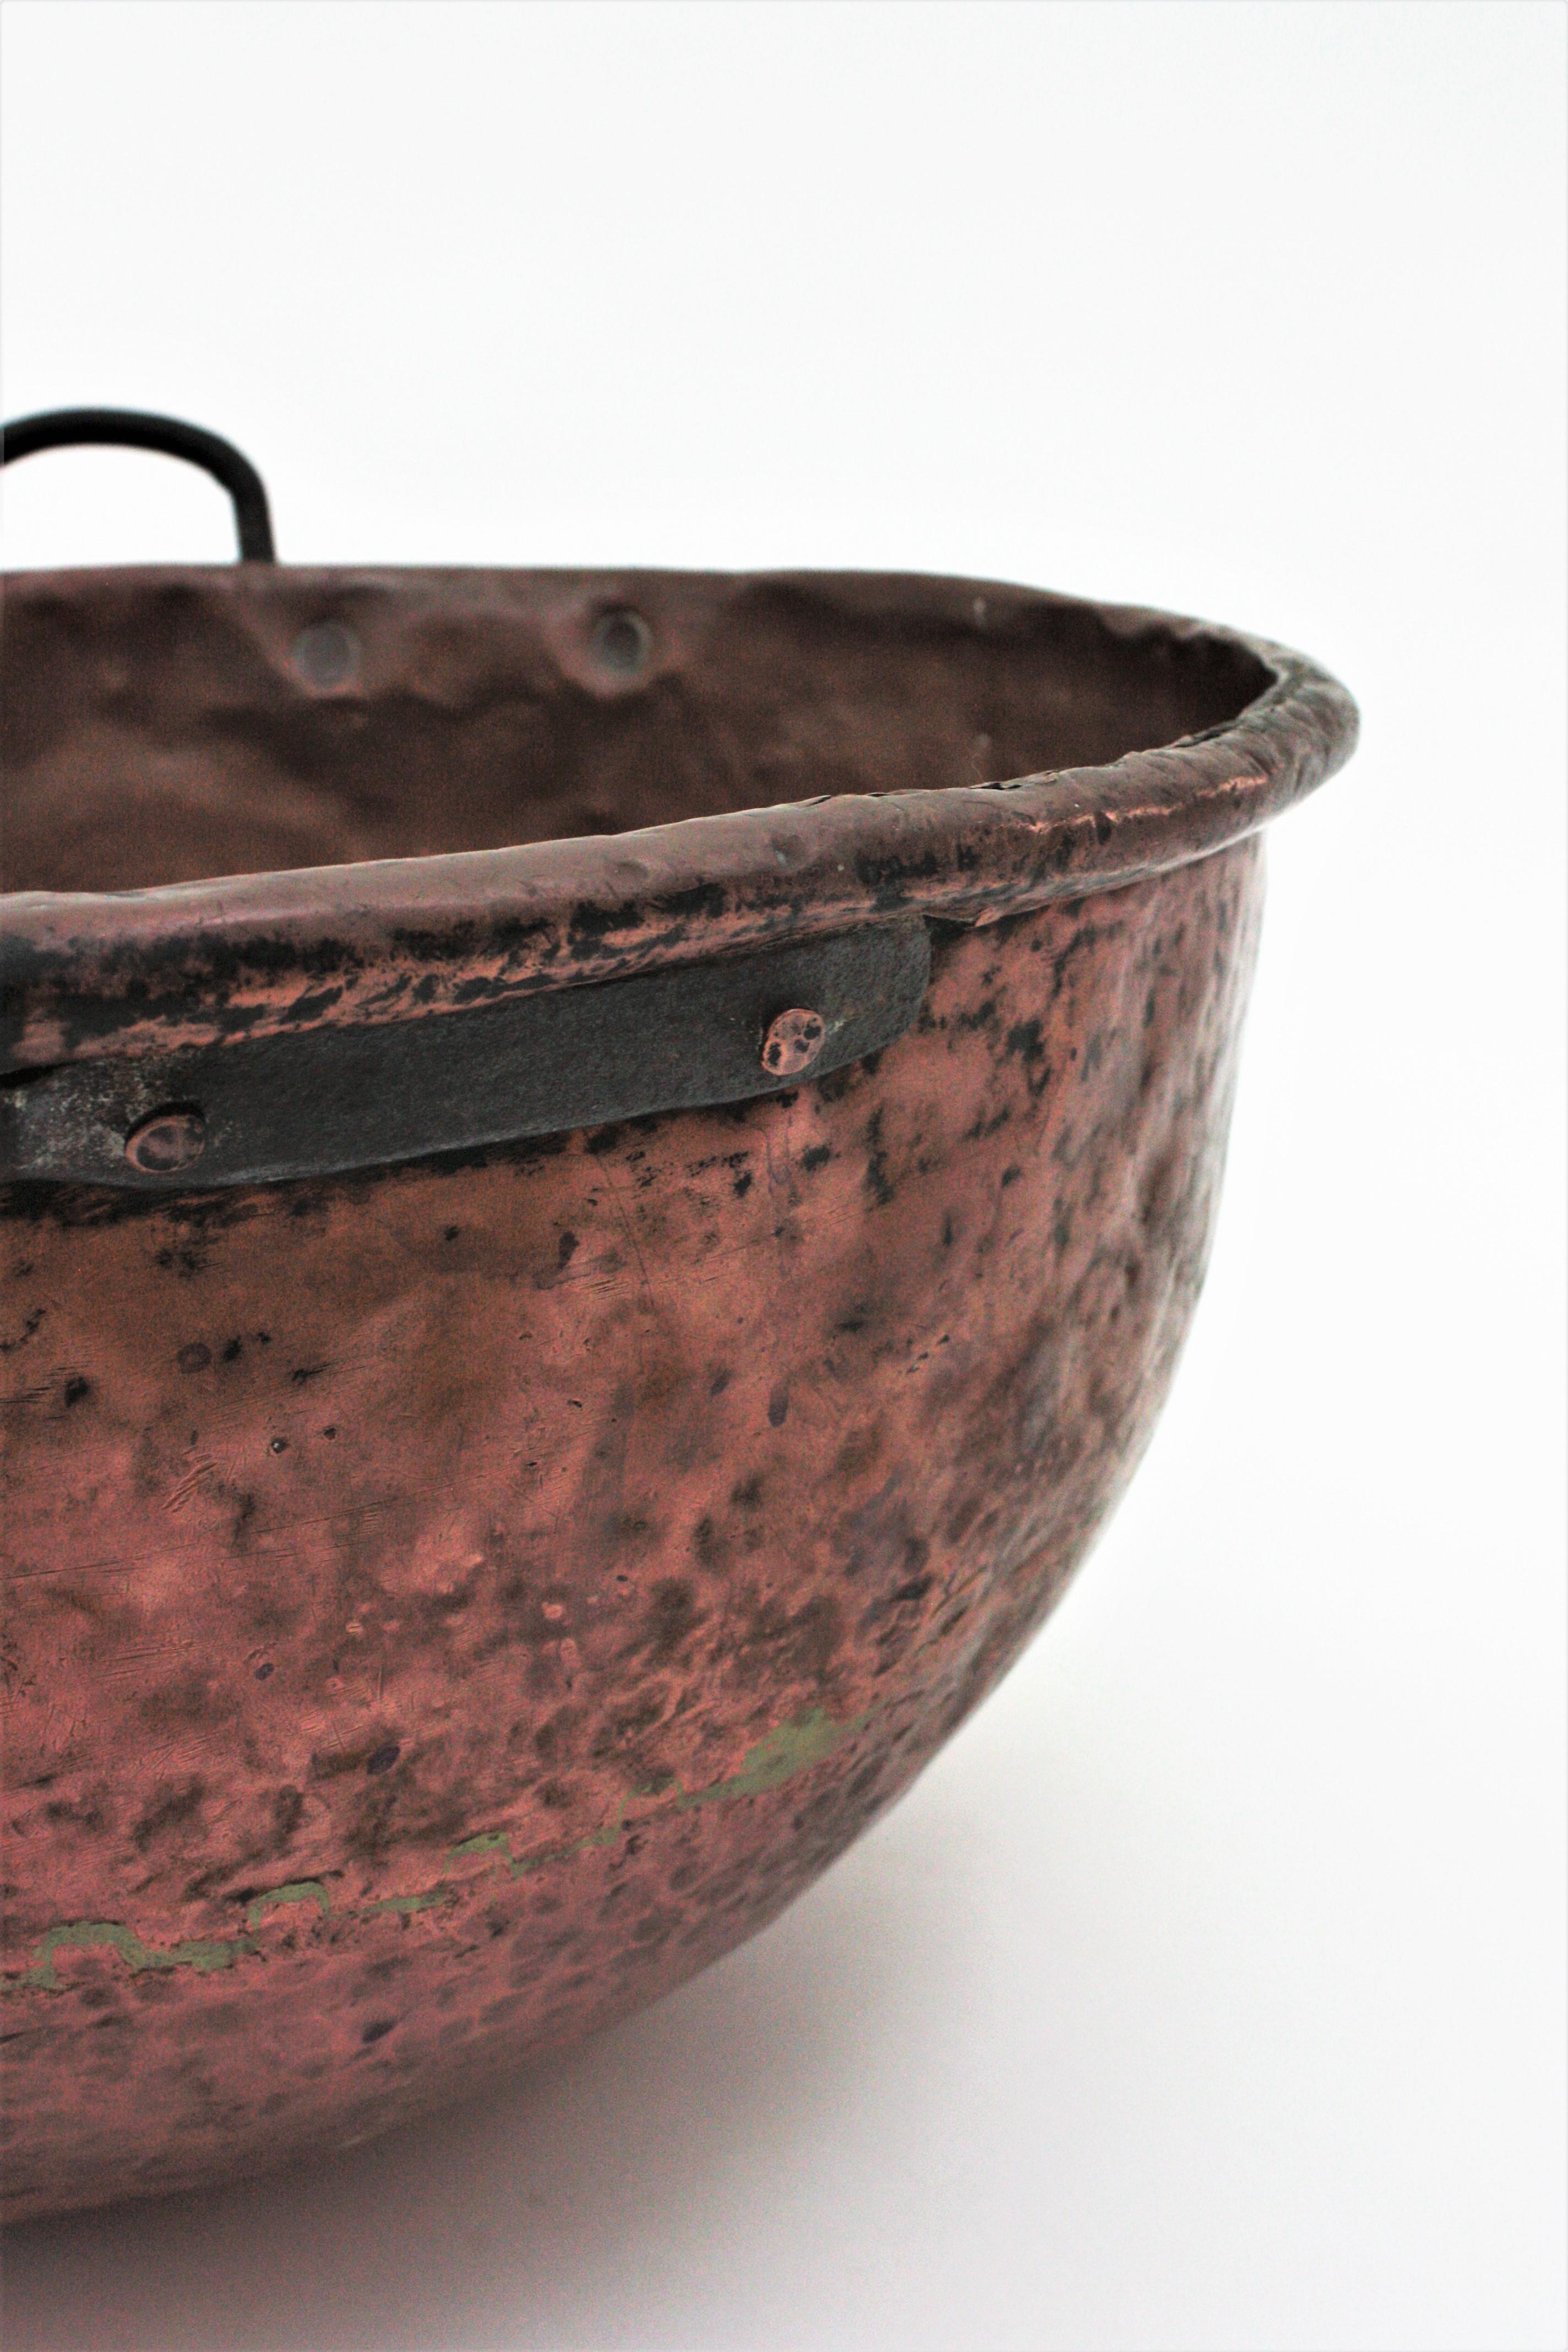 Massive French Copper Cauldron Pot with Iron Handles 6